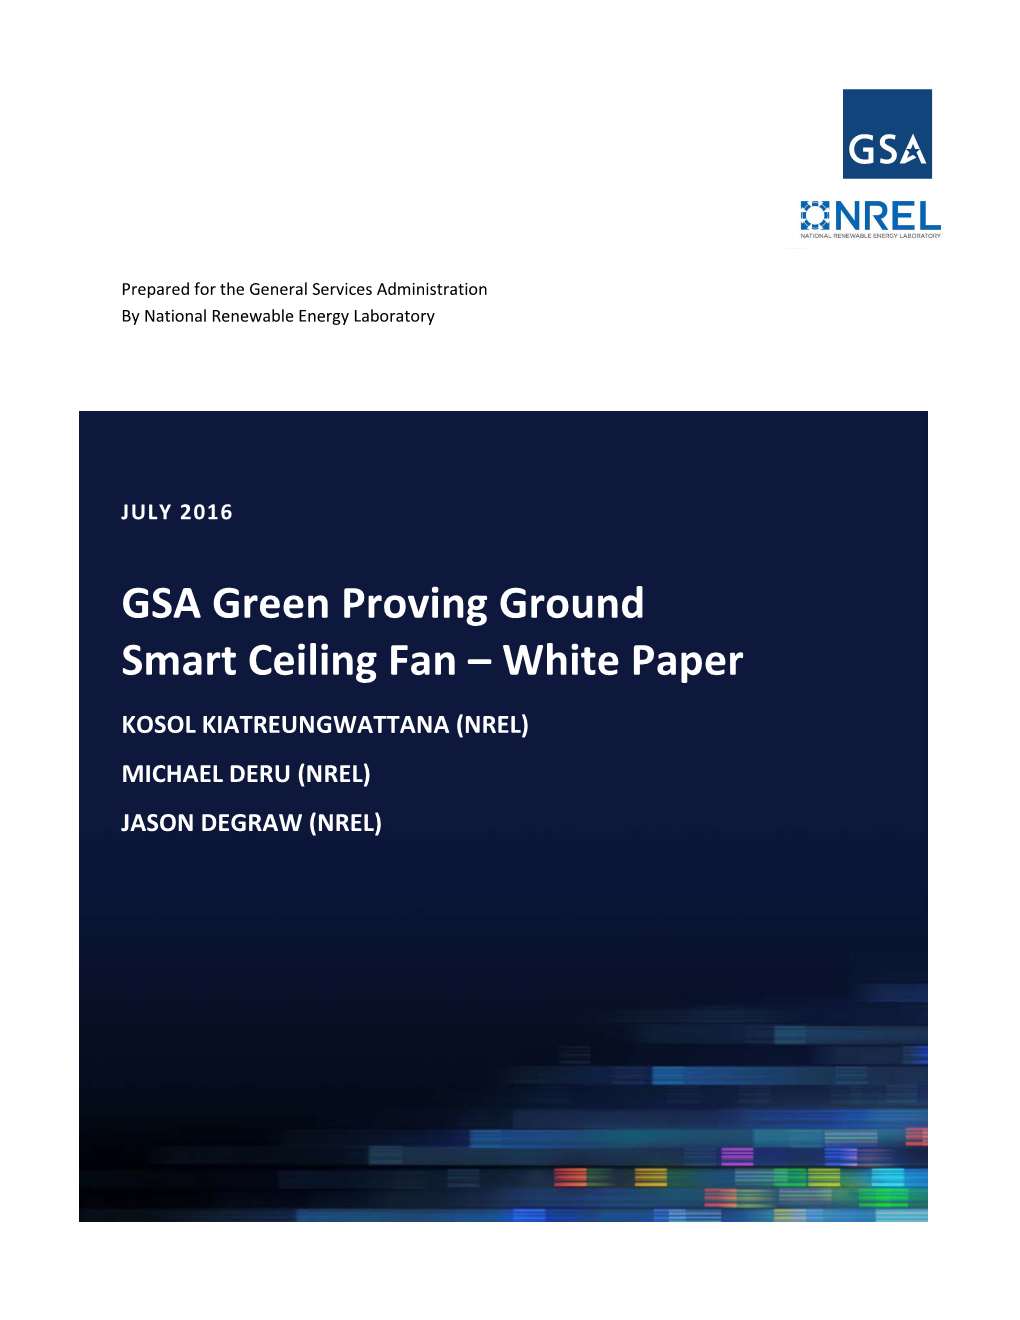 GSA Green Proving Ground Smart Ceiling Fan – White Paper KOSOL KIATREUNGWATTANA (NREL) MICHAEL DERU (NREL) JASON DEGRAW (NREL)